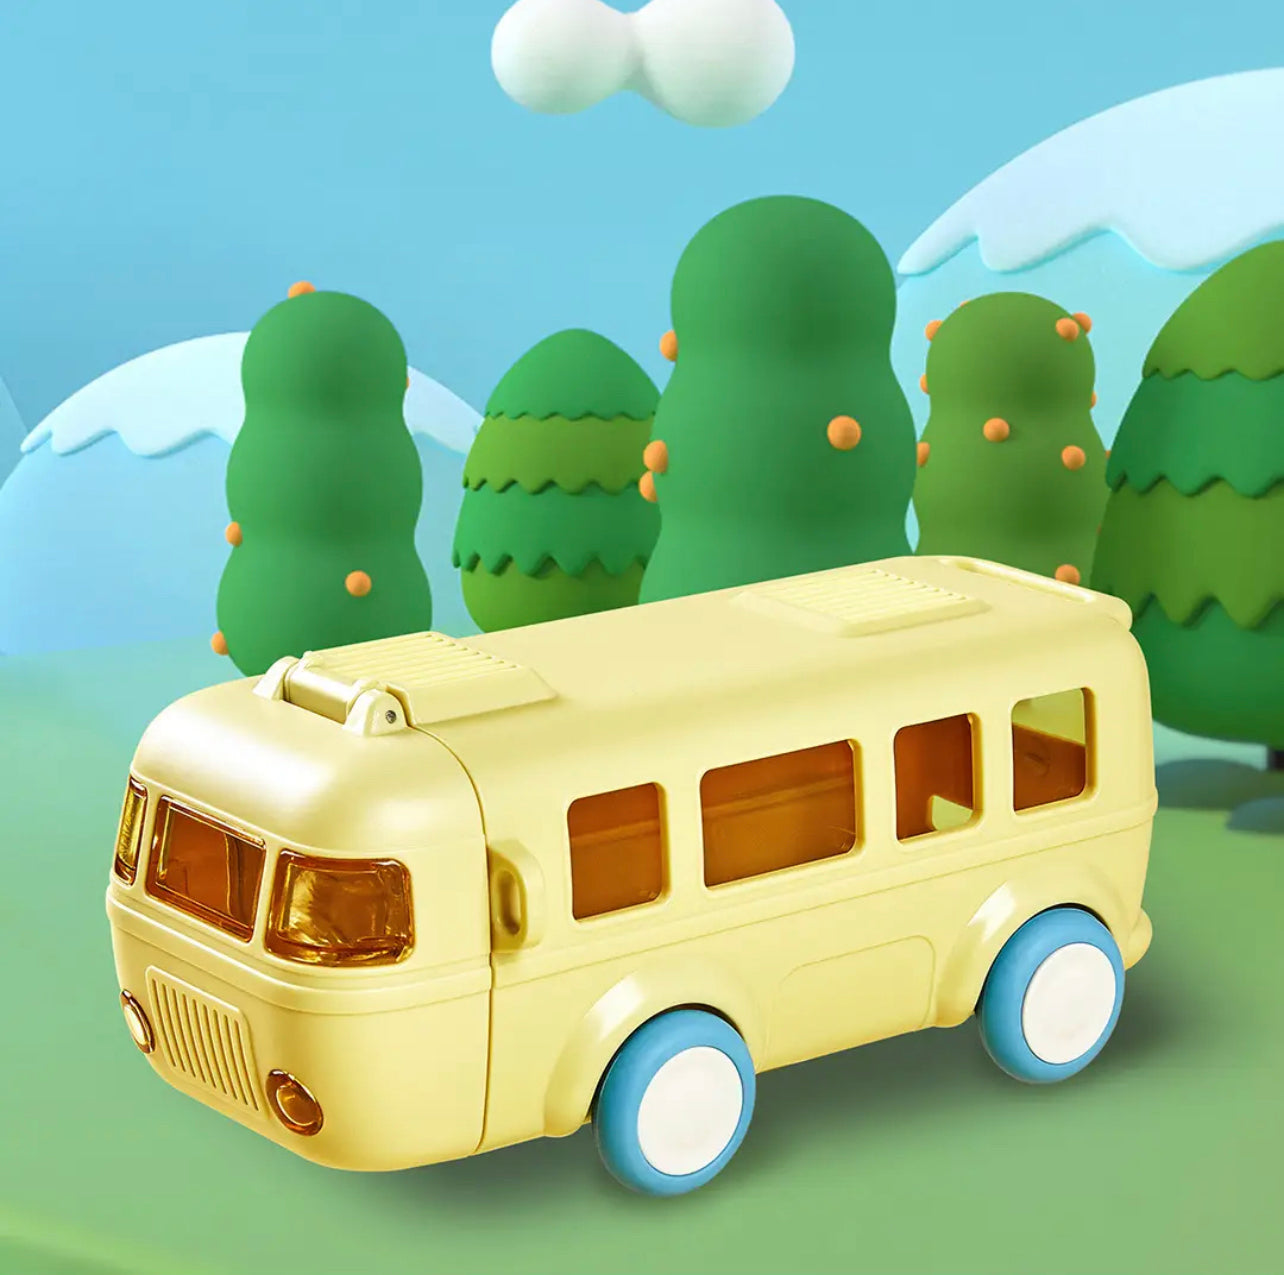 Cute Bus Adventure : 500ml Sipper (Original Tritan Quality)